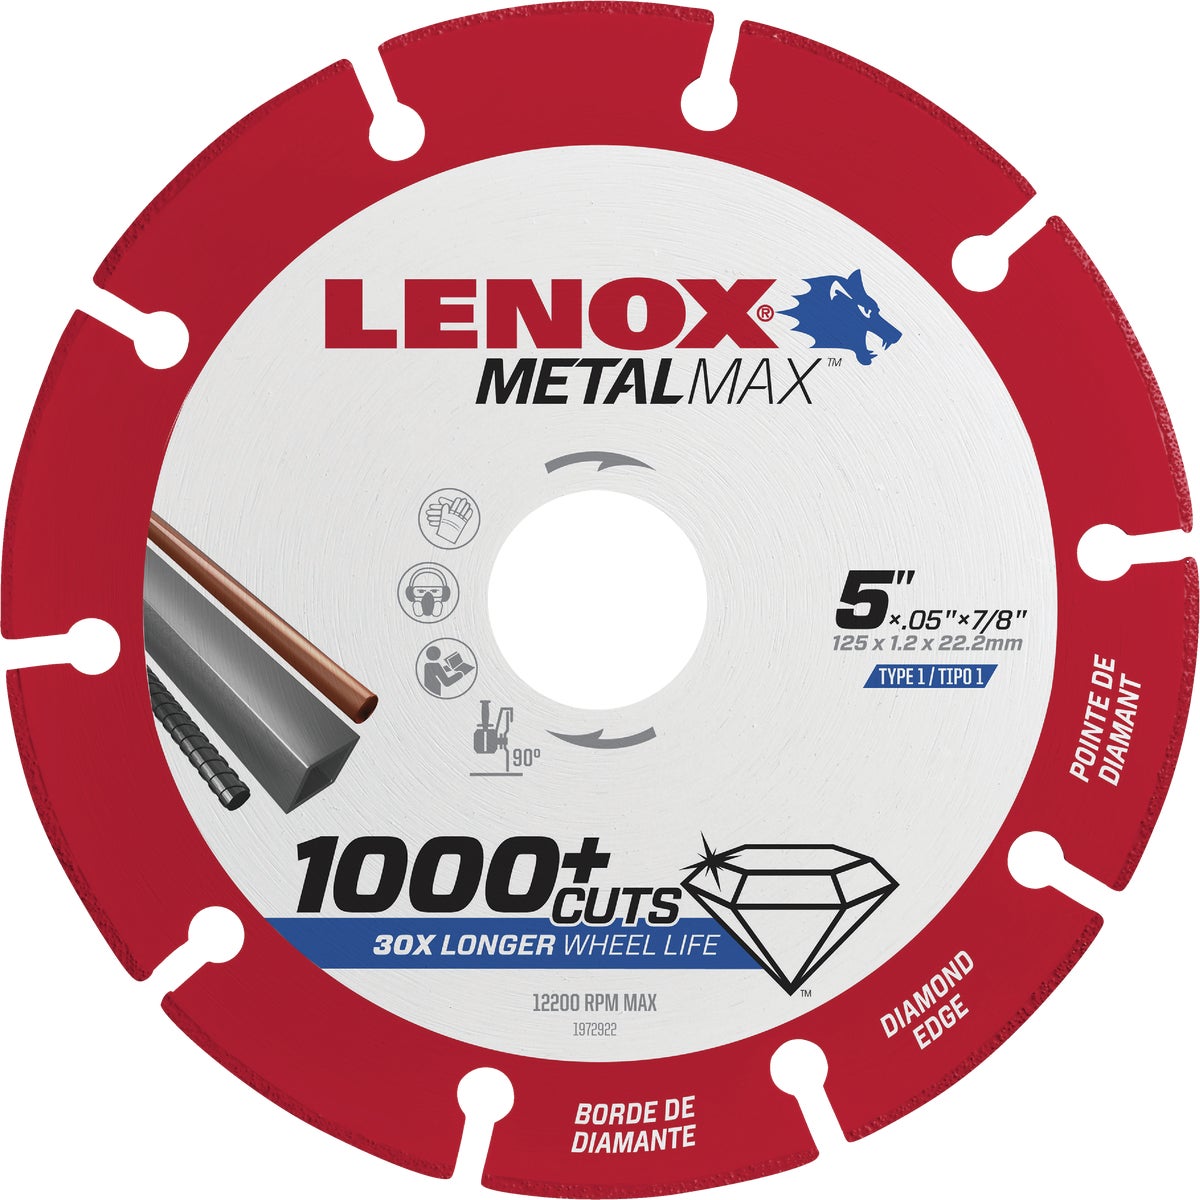 Lenox MetalMax 5 In. Segmented Rim Dry Cut Diamond Blade